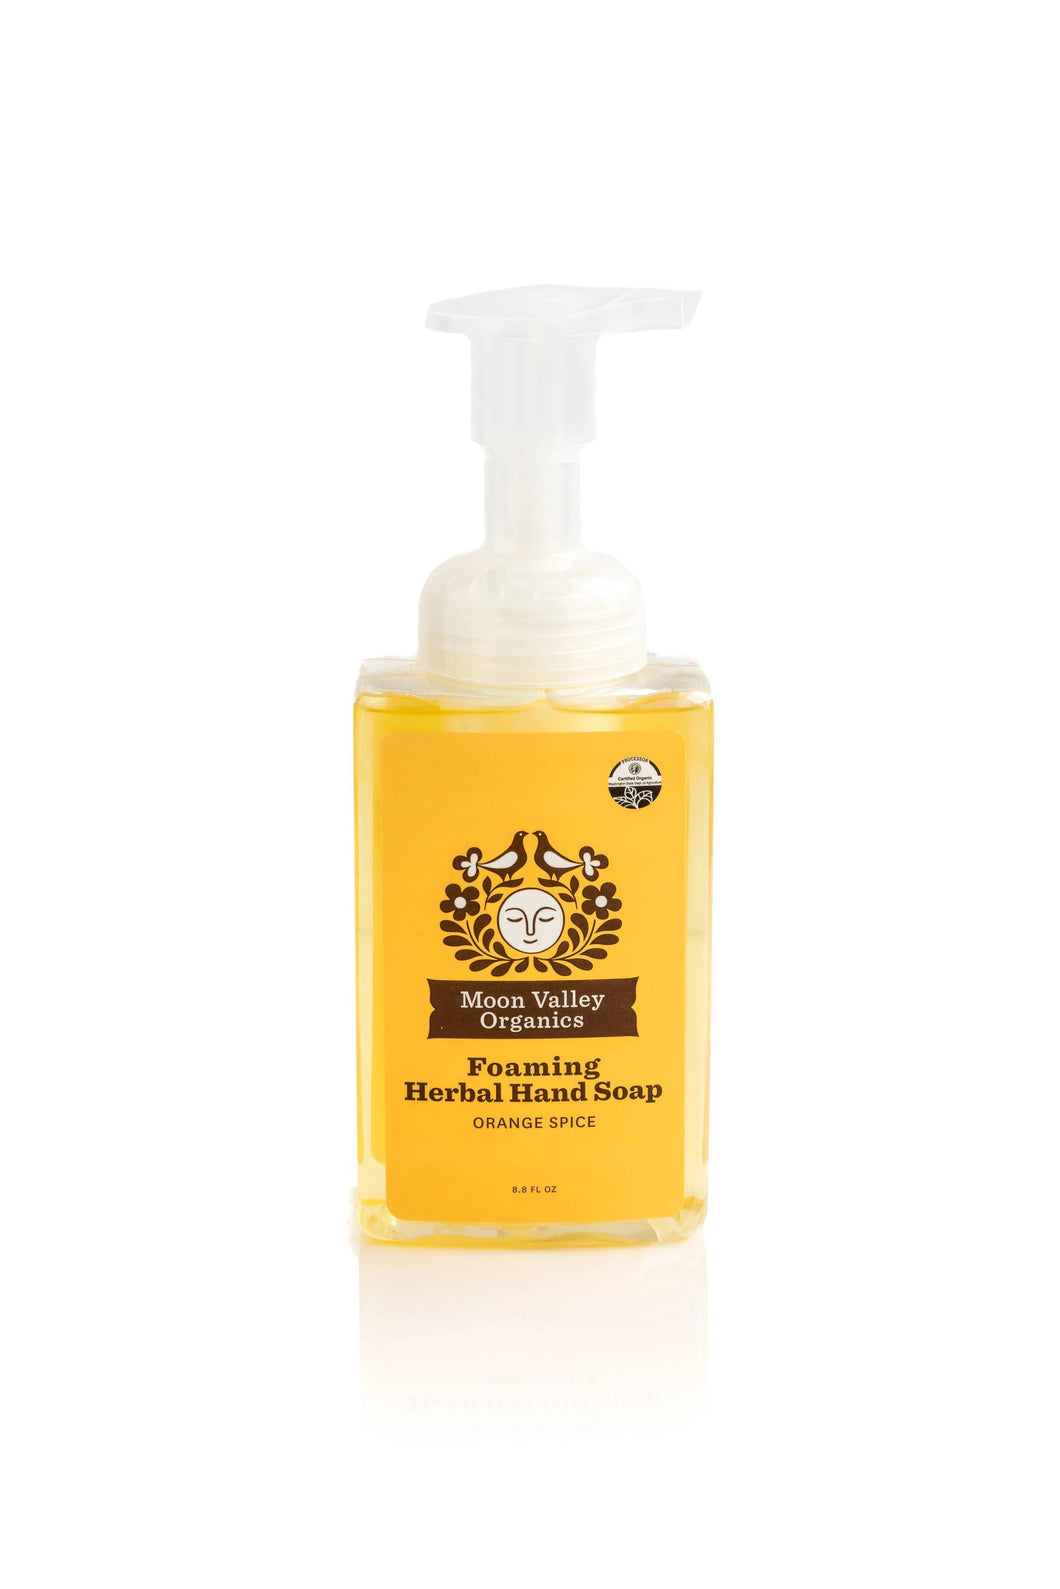 Moon Valley Organics - Orange Spice Foaming Herbal Hand Soap